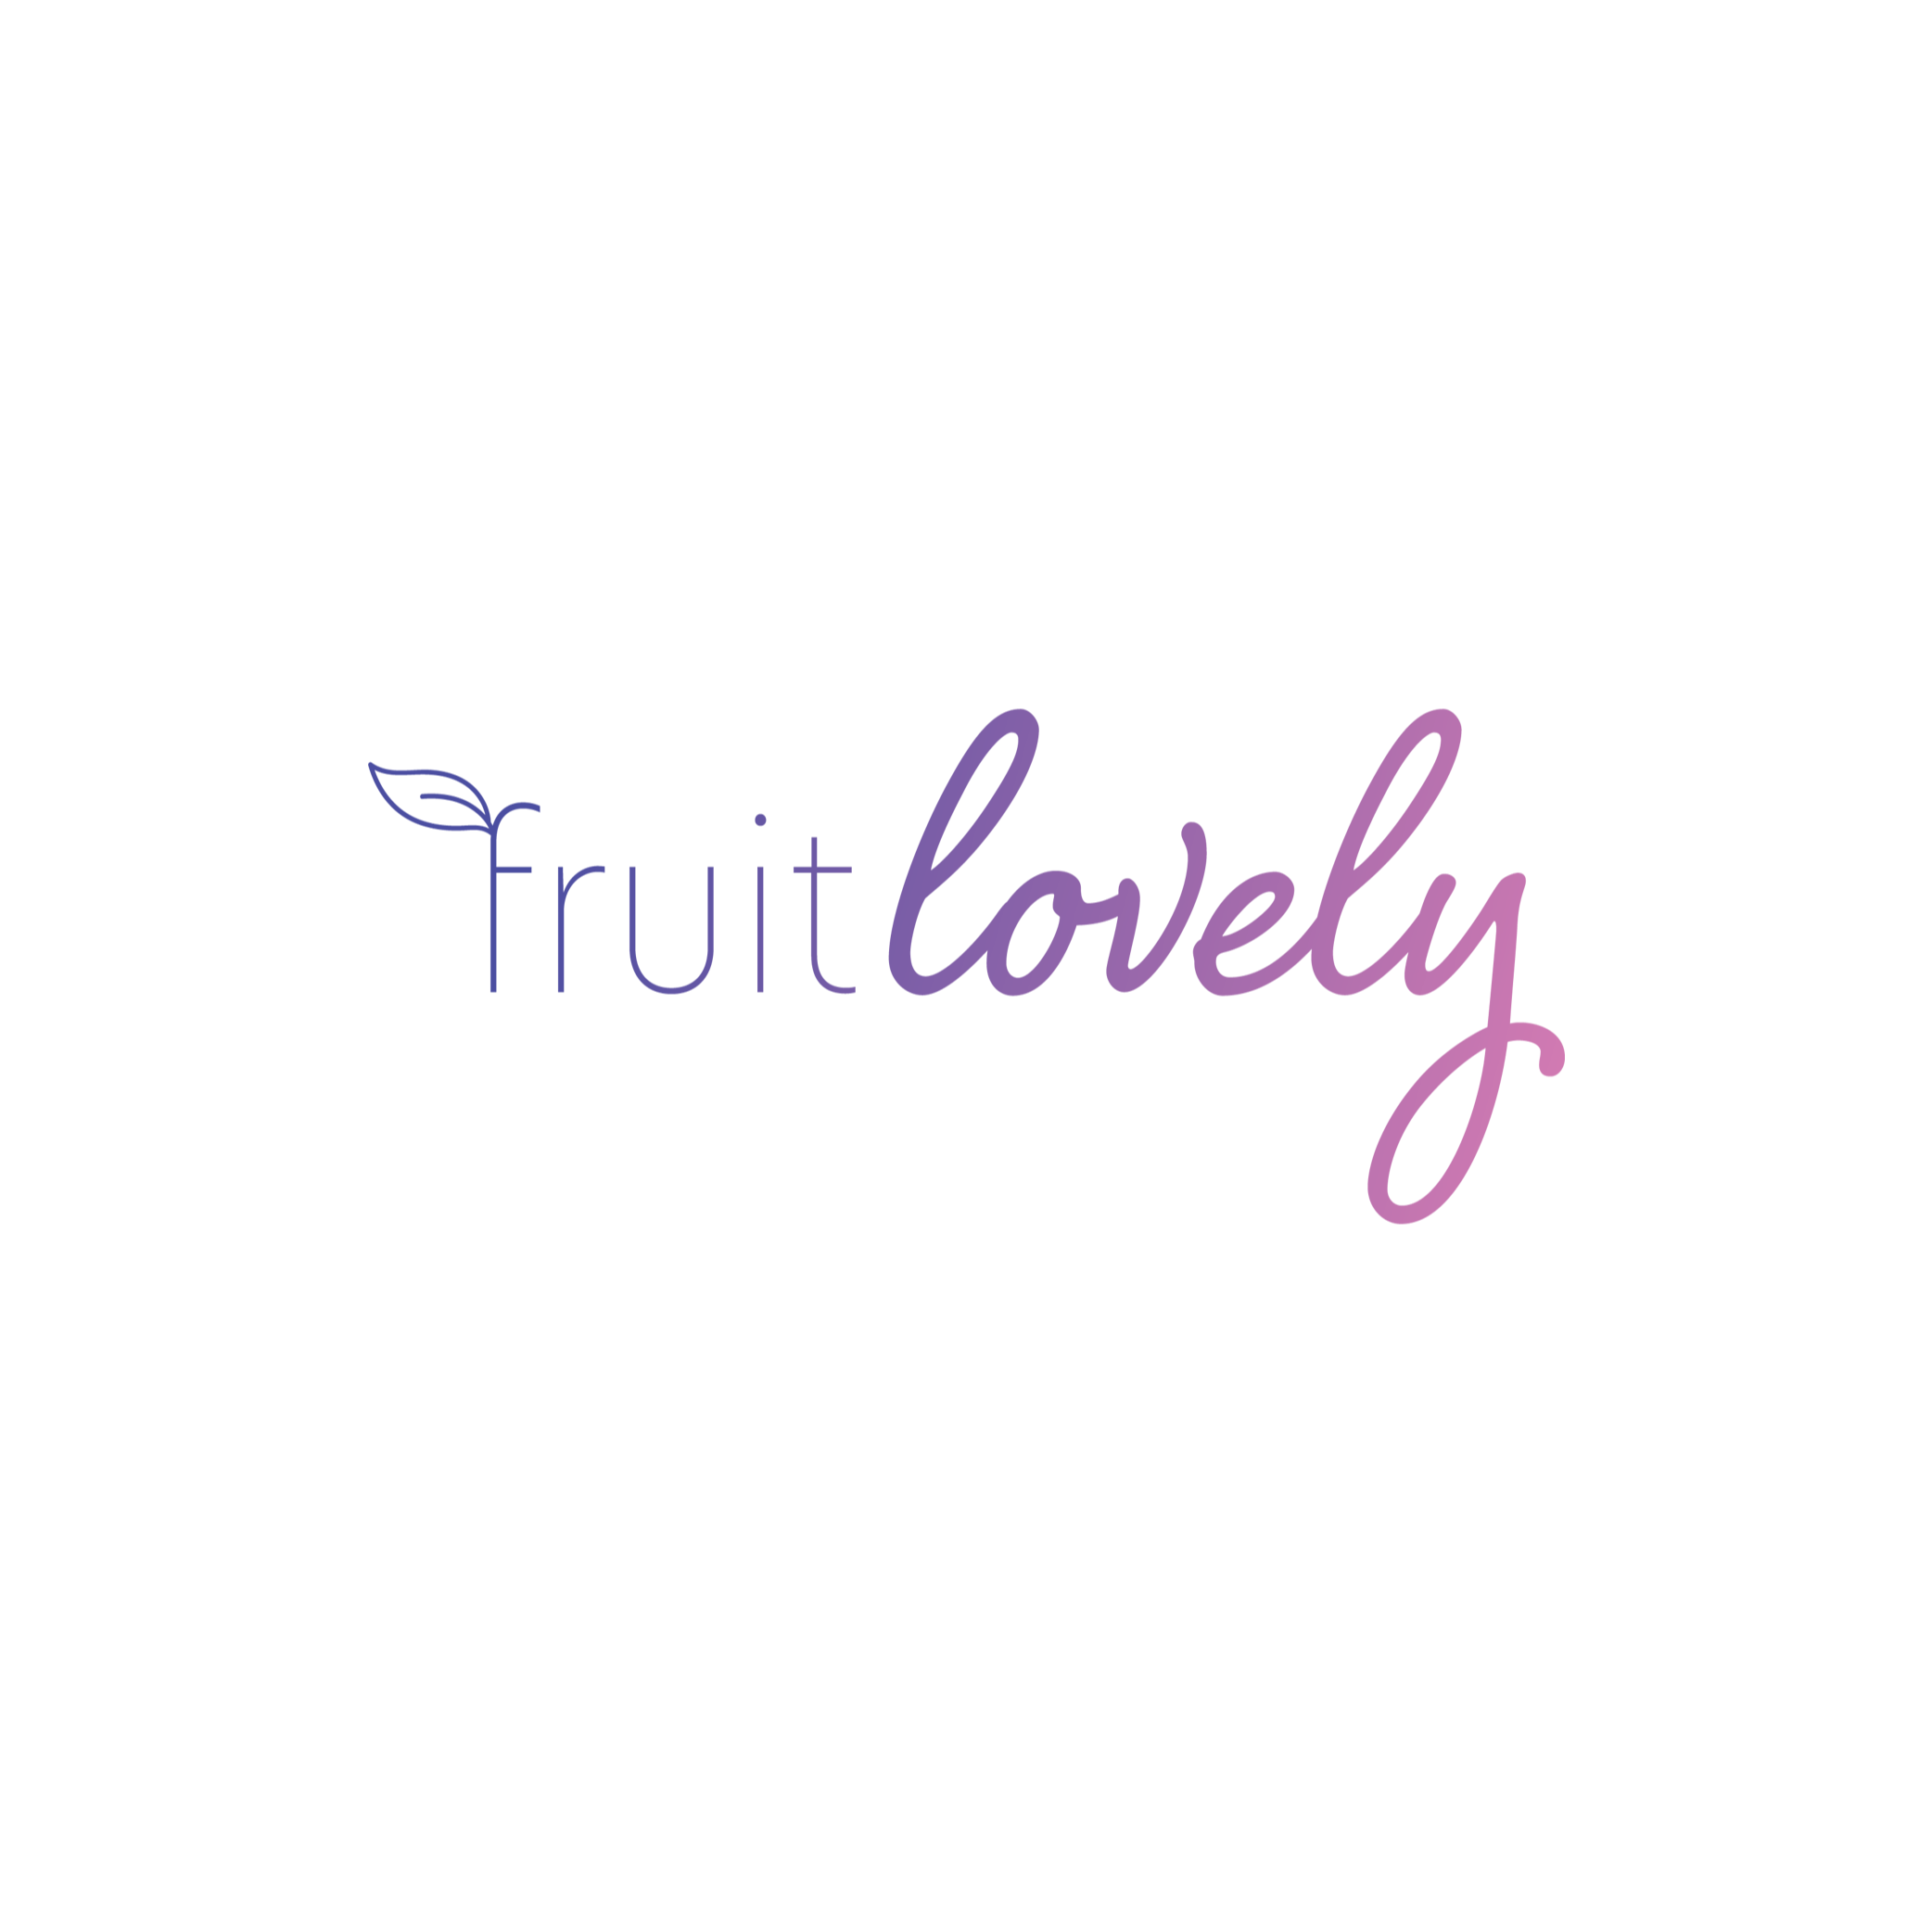 Fruit Lovely - Tuscaloosa, AL 35404 - (205)758-1719 | ShowMeLocal.com